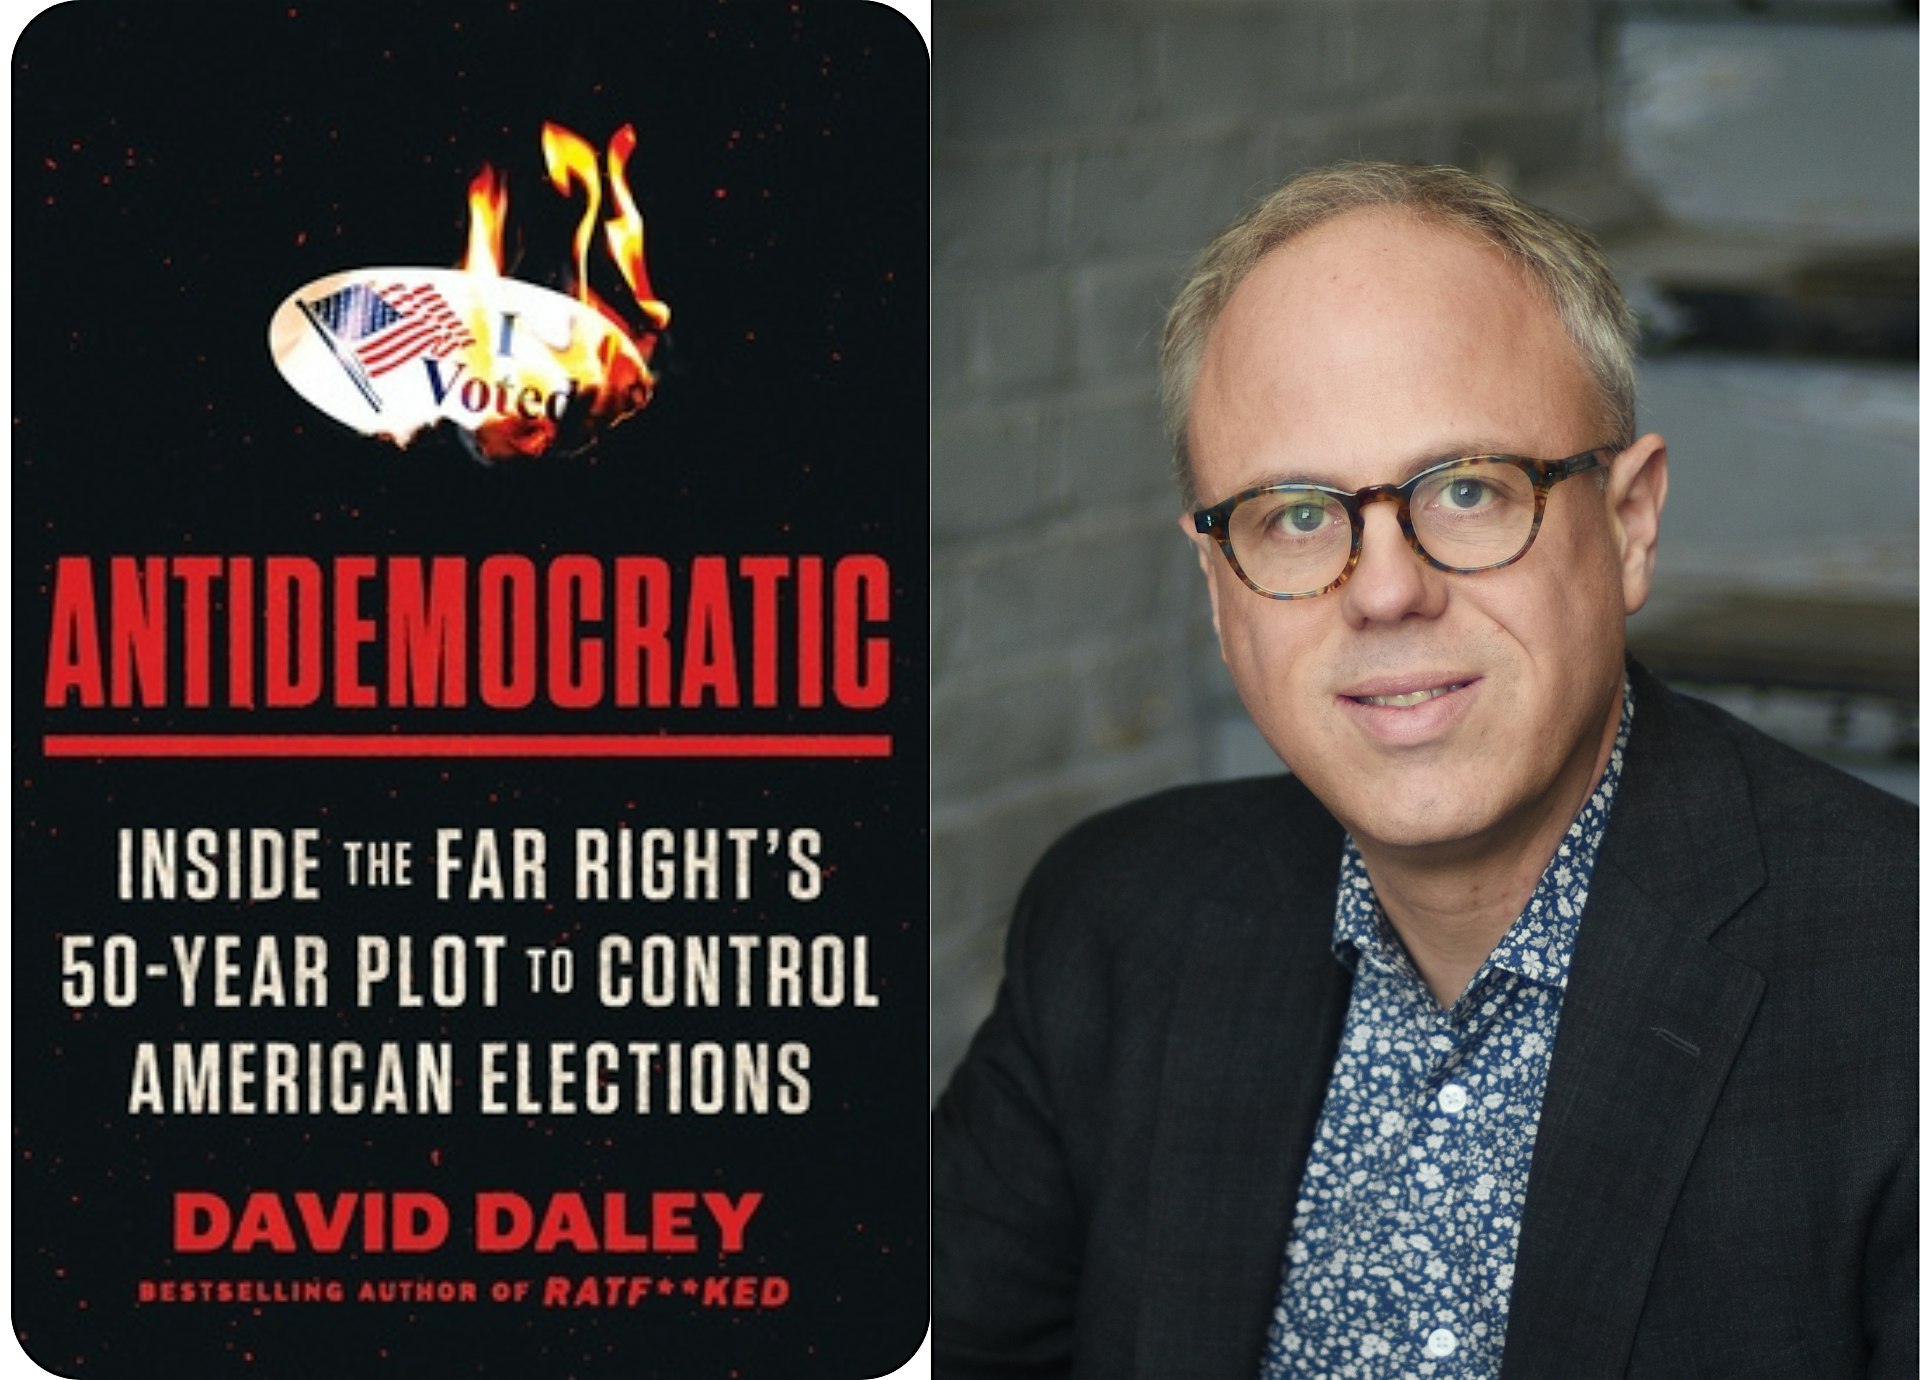 David Dailey in Person